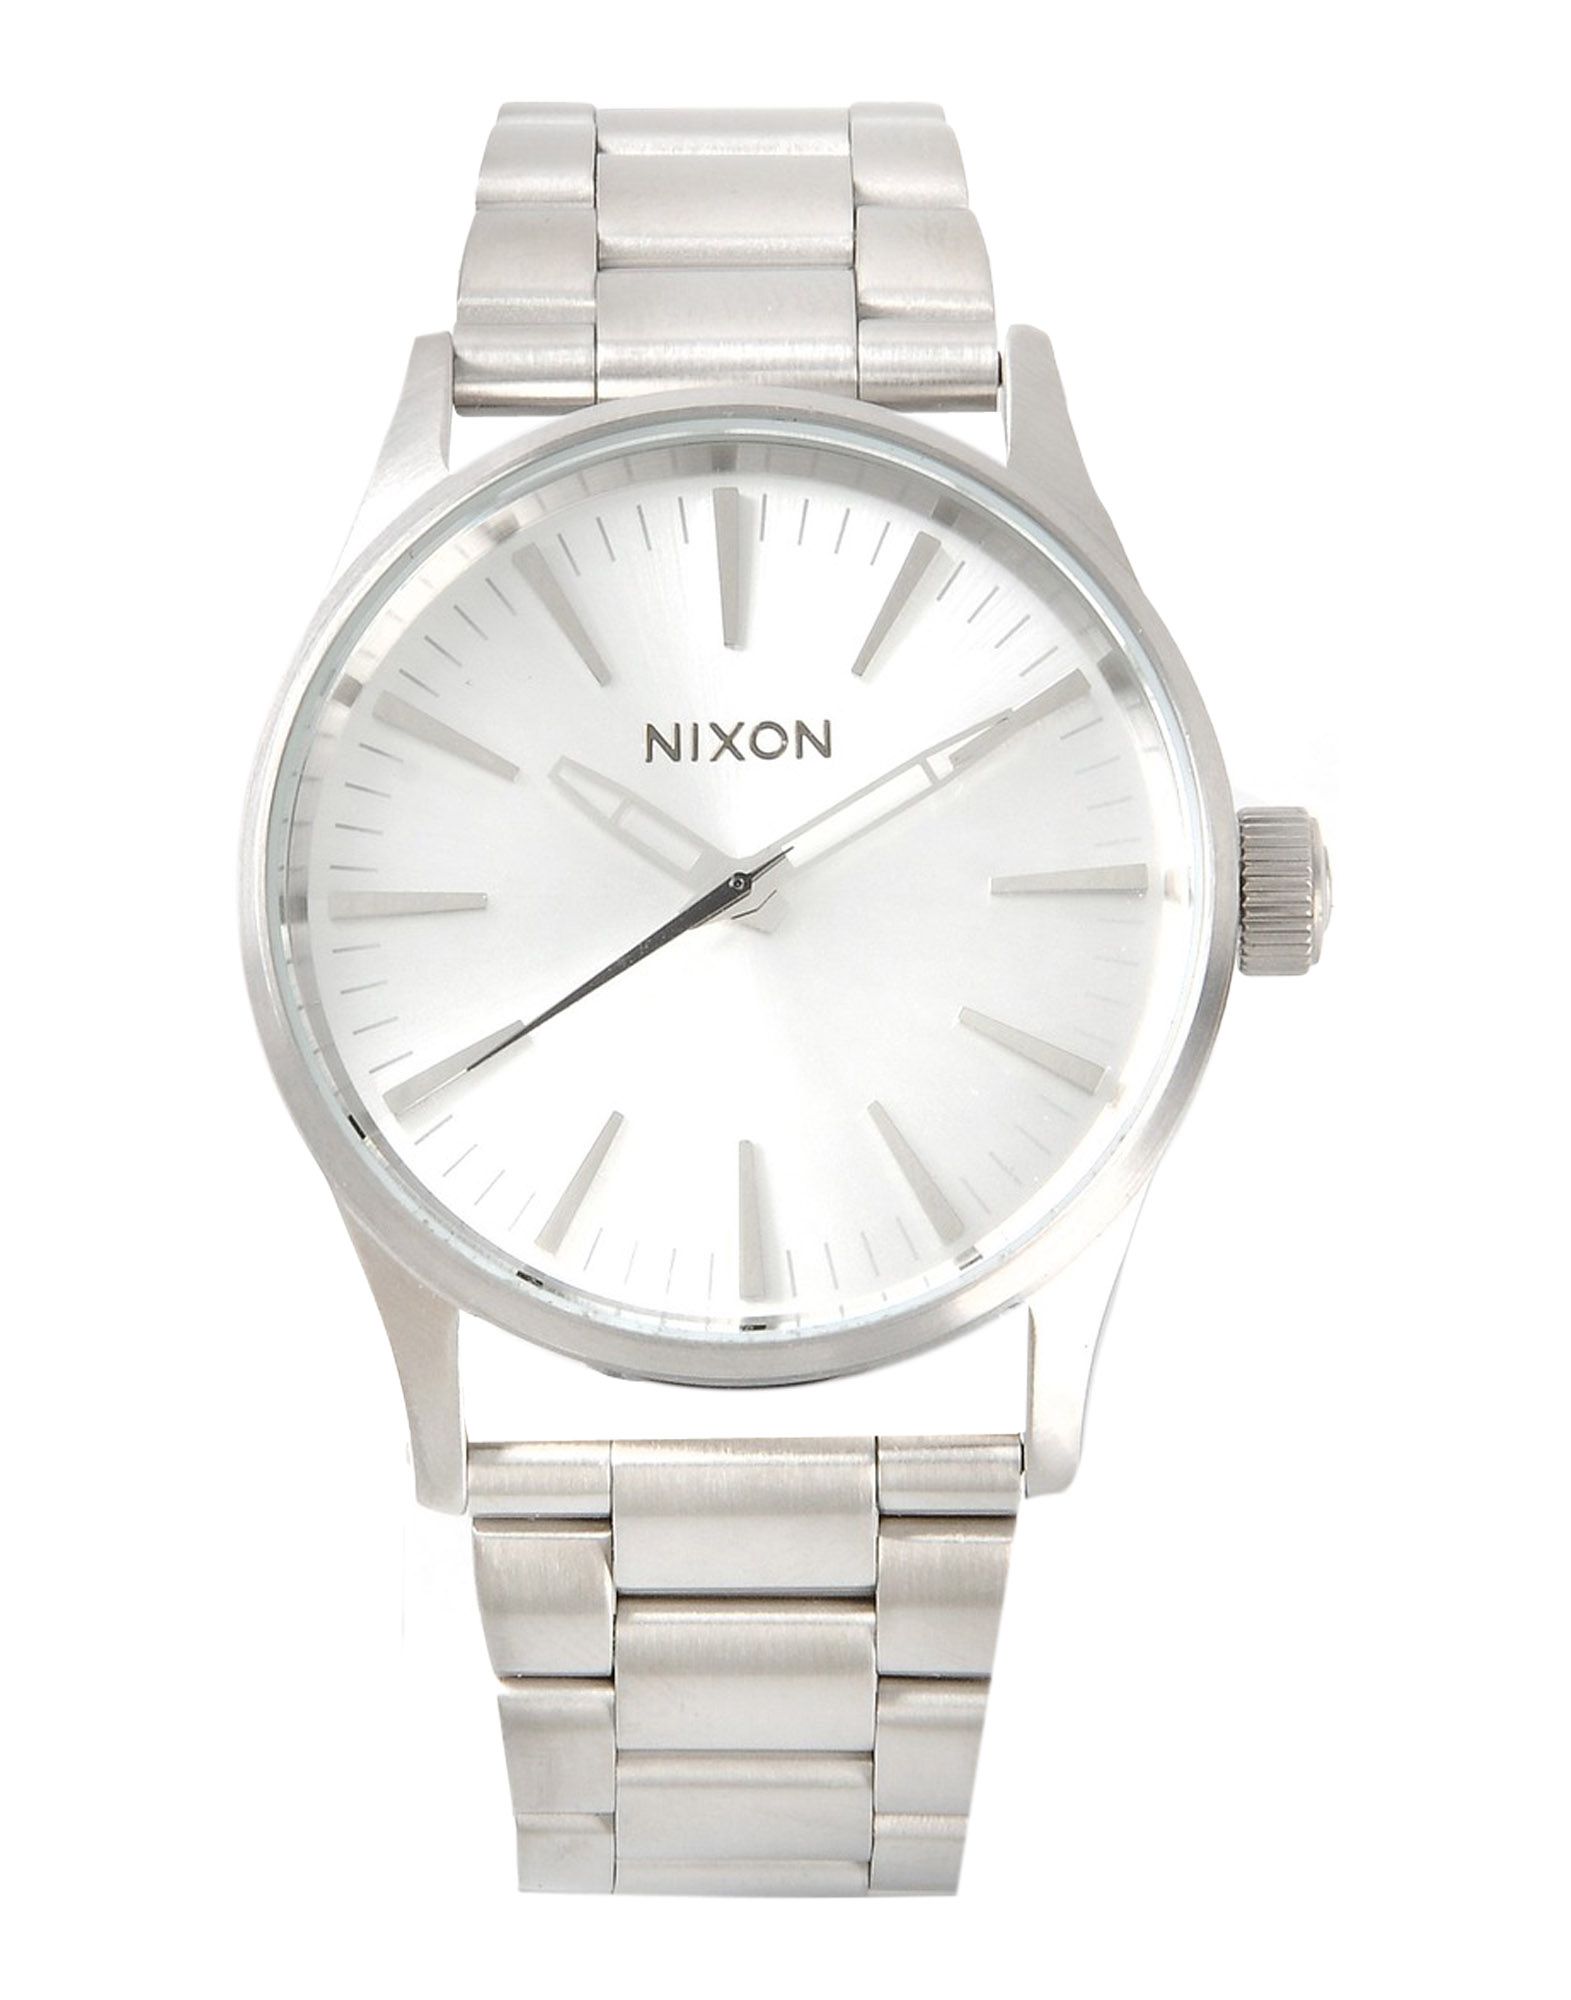 NIXON メンズ 腕時計 シルバー ステンレススチール A450 SENTRY 38 SS